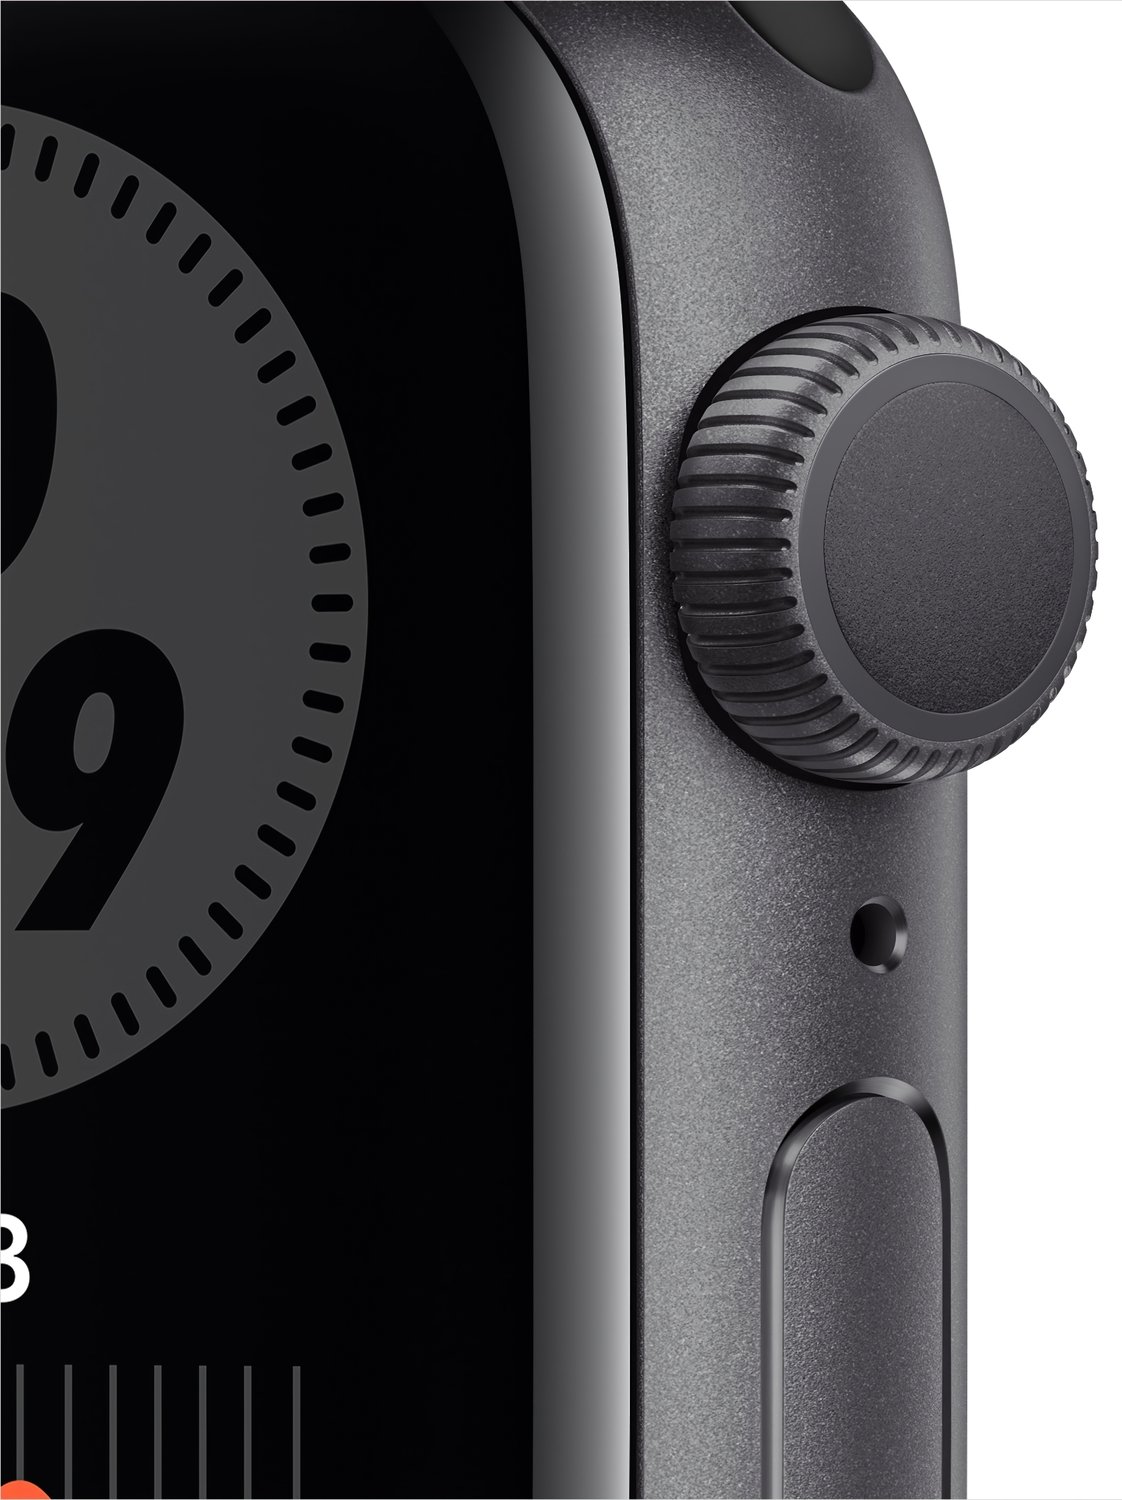 Смарт-часы Apple Watch Nike Series 6 GPS 40mm Space Gray Aluminium Case with Anthracite/Black Nike Sport Band Regular фото 